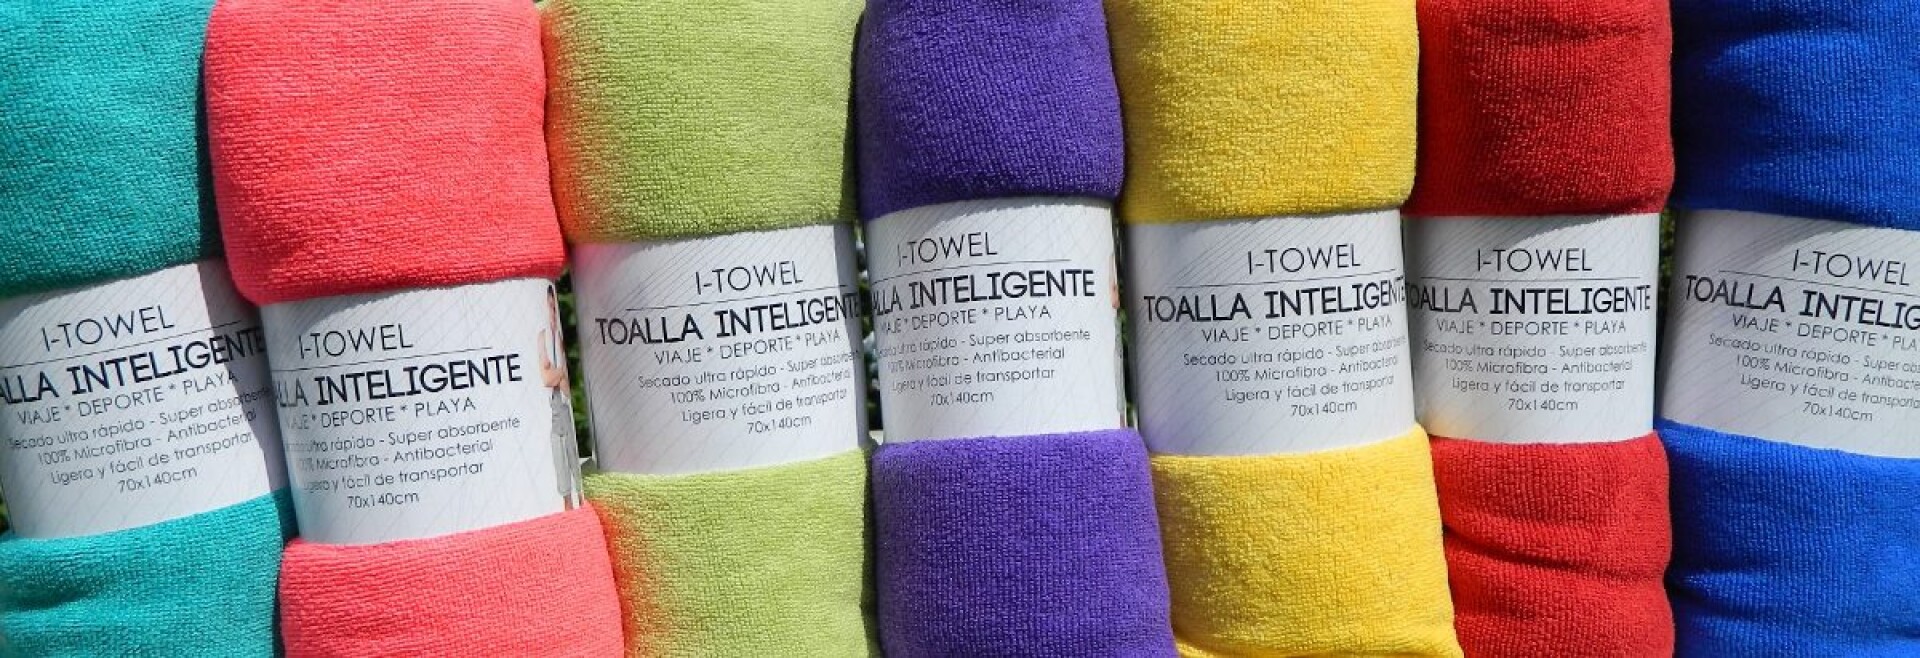 I Towel Toalla Inteligente - Varios 